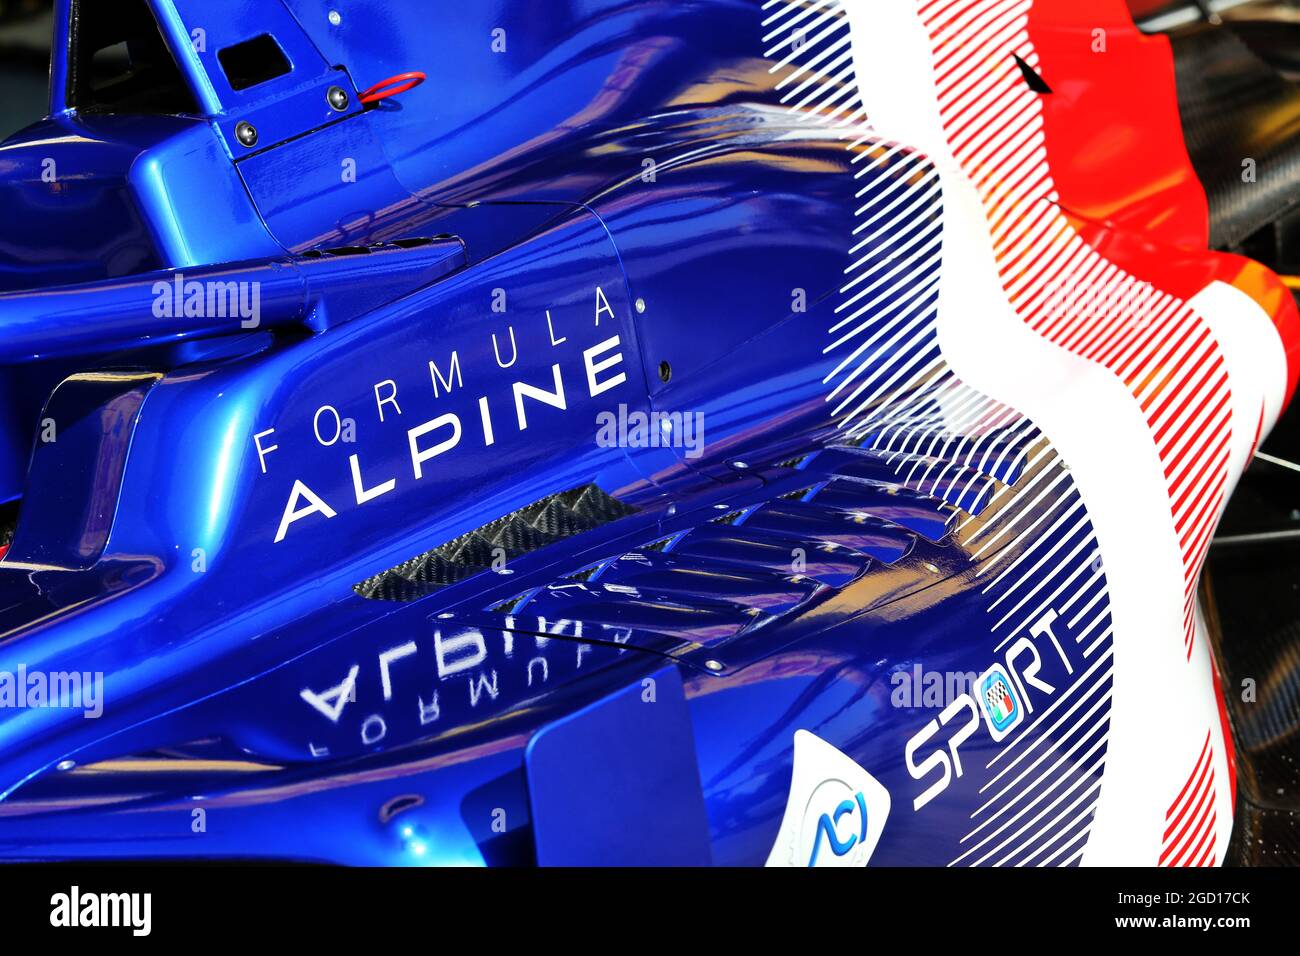 Se presenta el Campeonato Europeo Regional de Fórmula de Alpine, certificado por la FIA. Gran Premio de Emilia Romagna, sábado 31st de octubre de 2020. Imola, Italia. Foto de stock